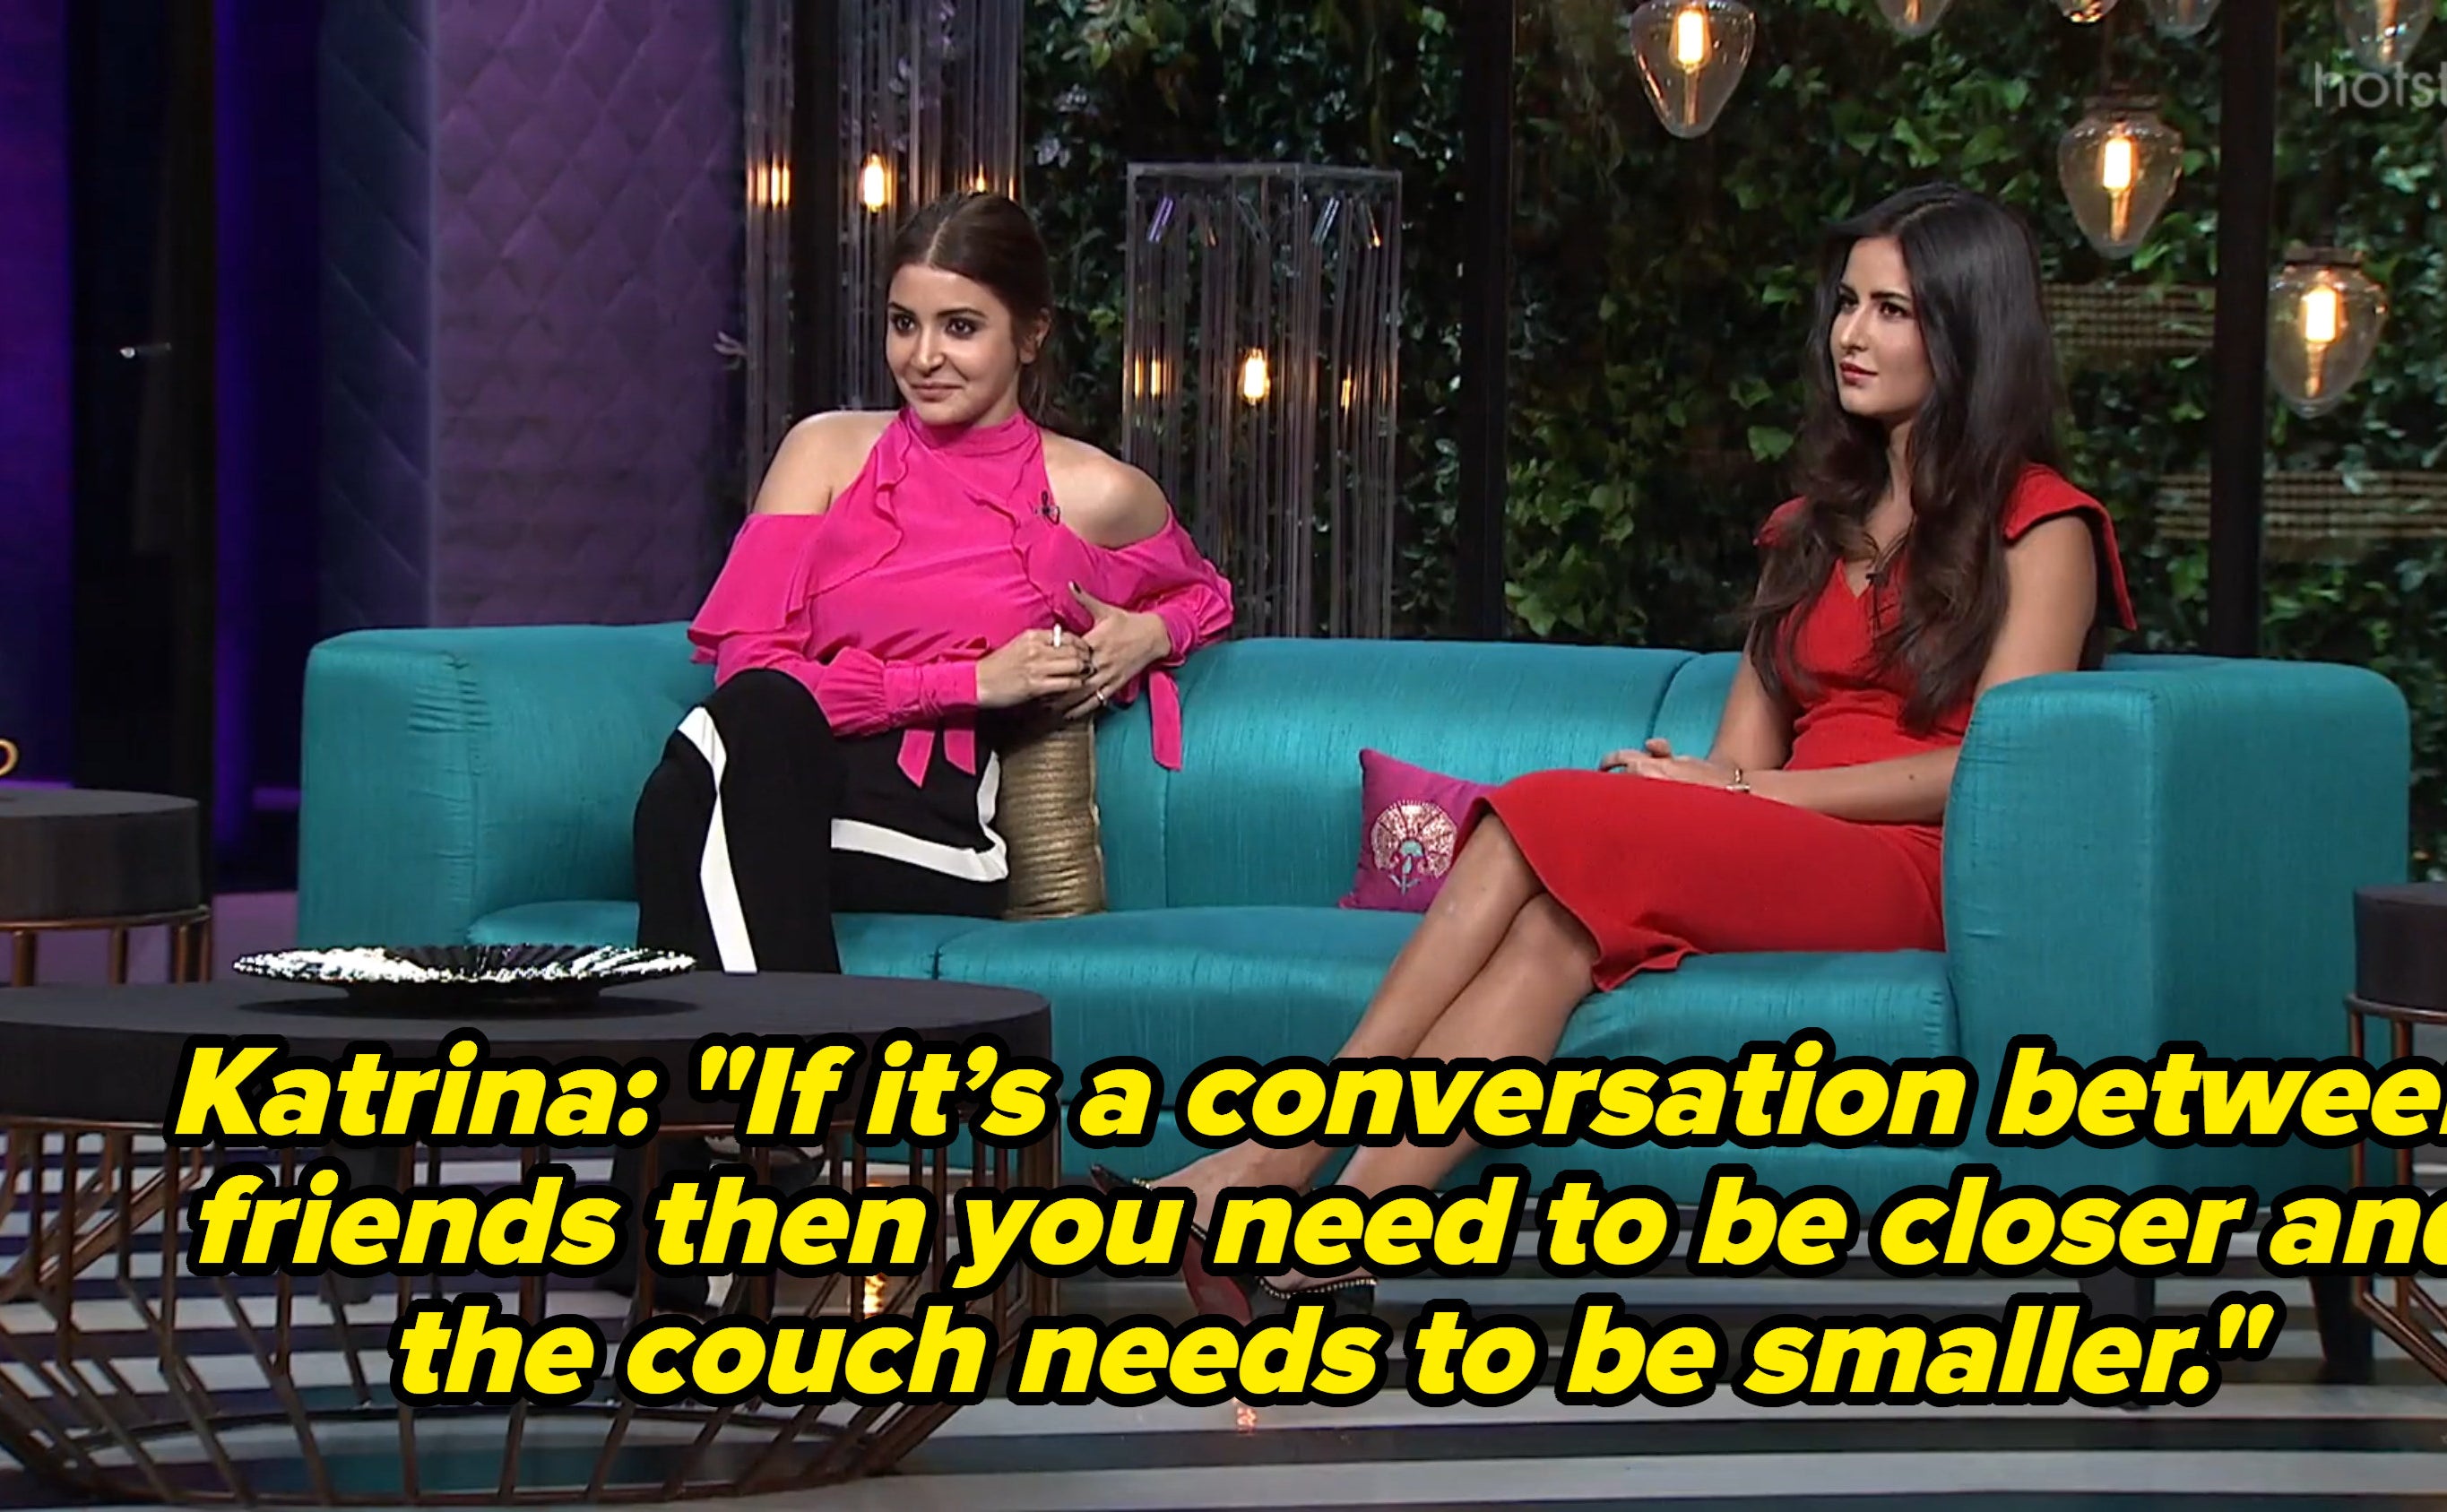 Katrina Kaif and Anushka Sharma sitting on the couch